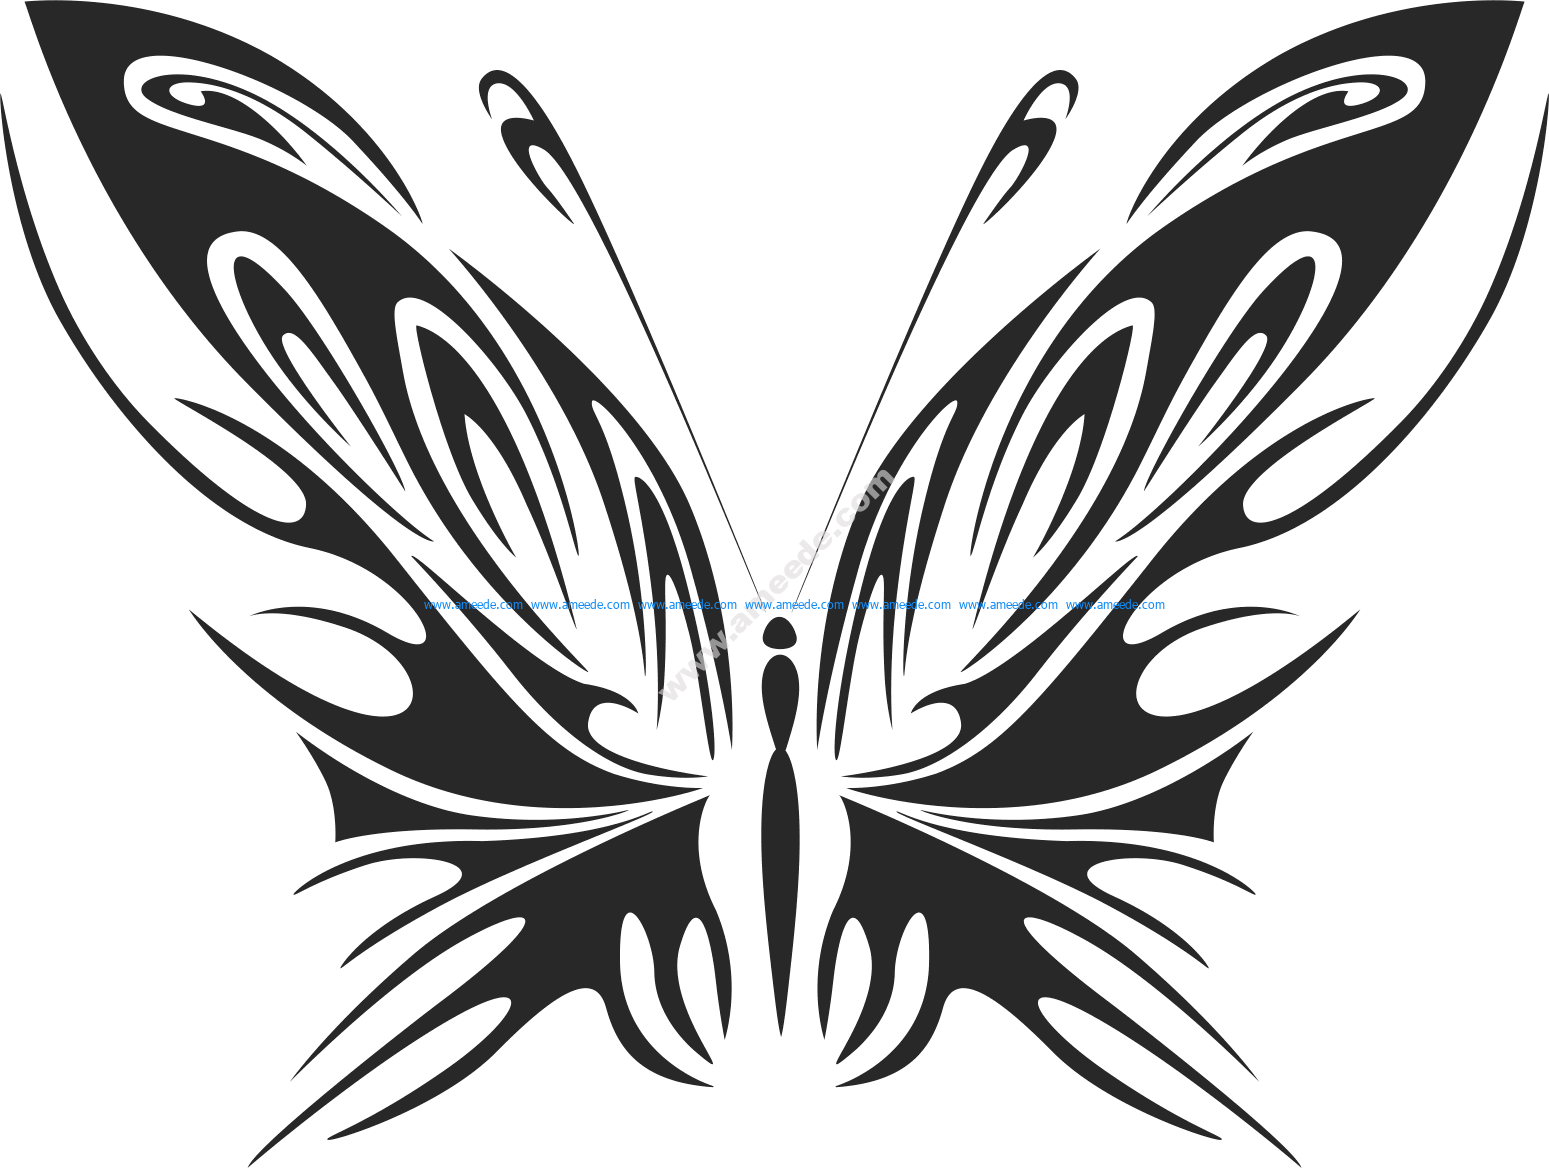 Download Tribal Butterfly Vector Art 40 - Download Vector